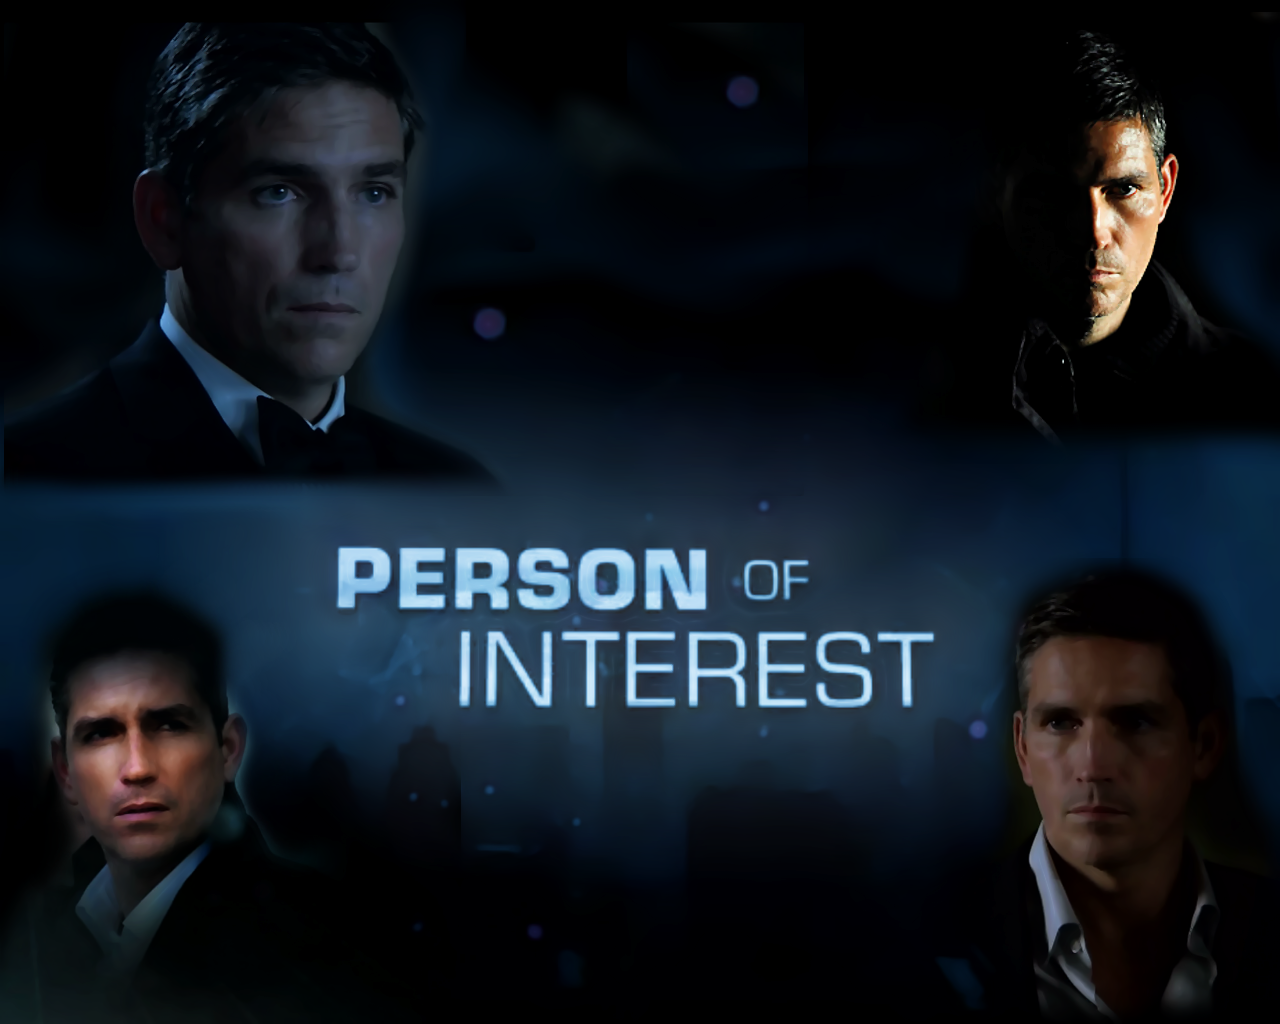 Person of Interest - Person of Interest Wallpaper (32495607) - Fanpop